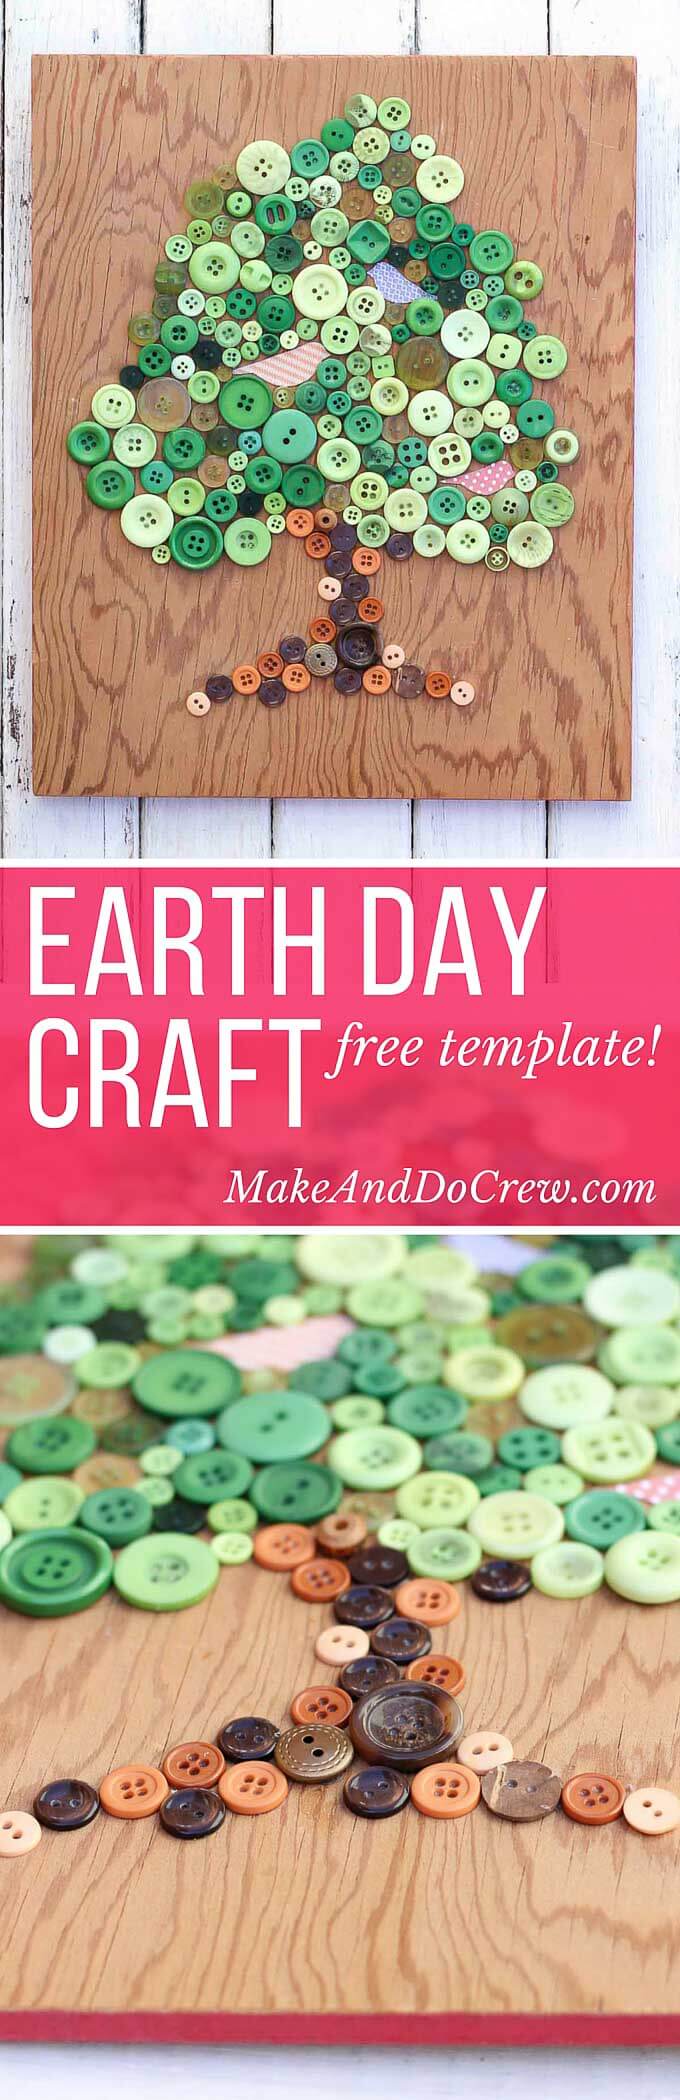 DIY Earth Day Craft Button Wall Art